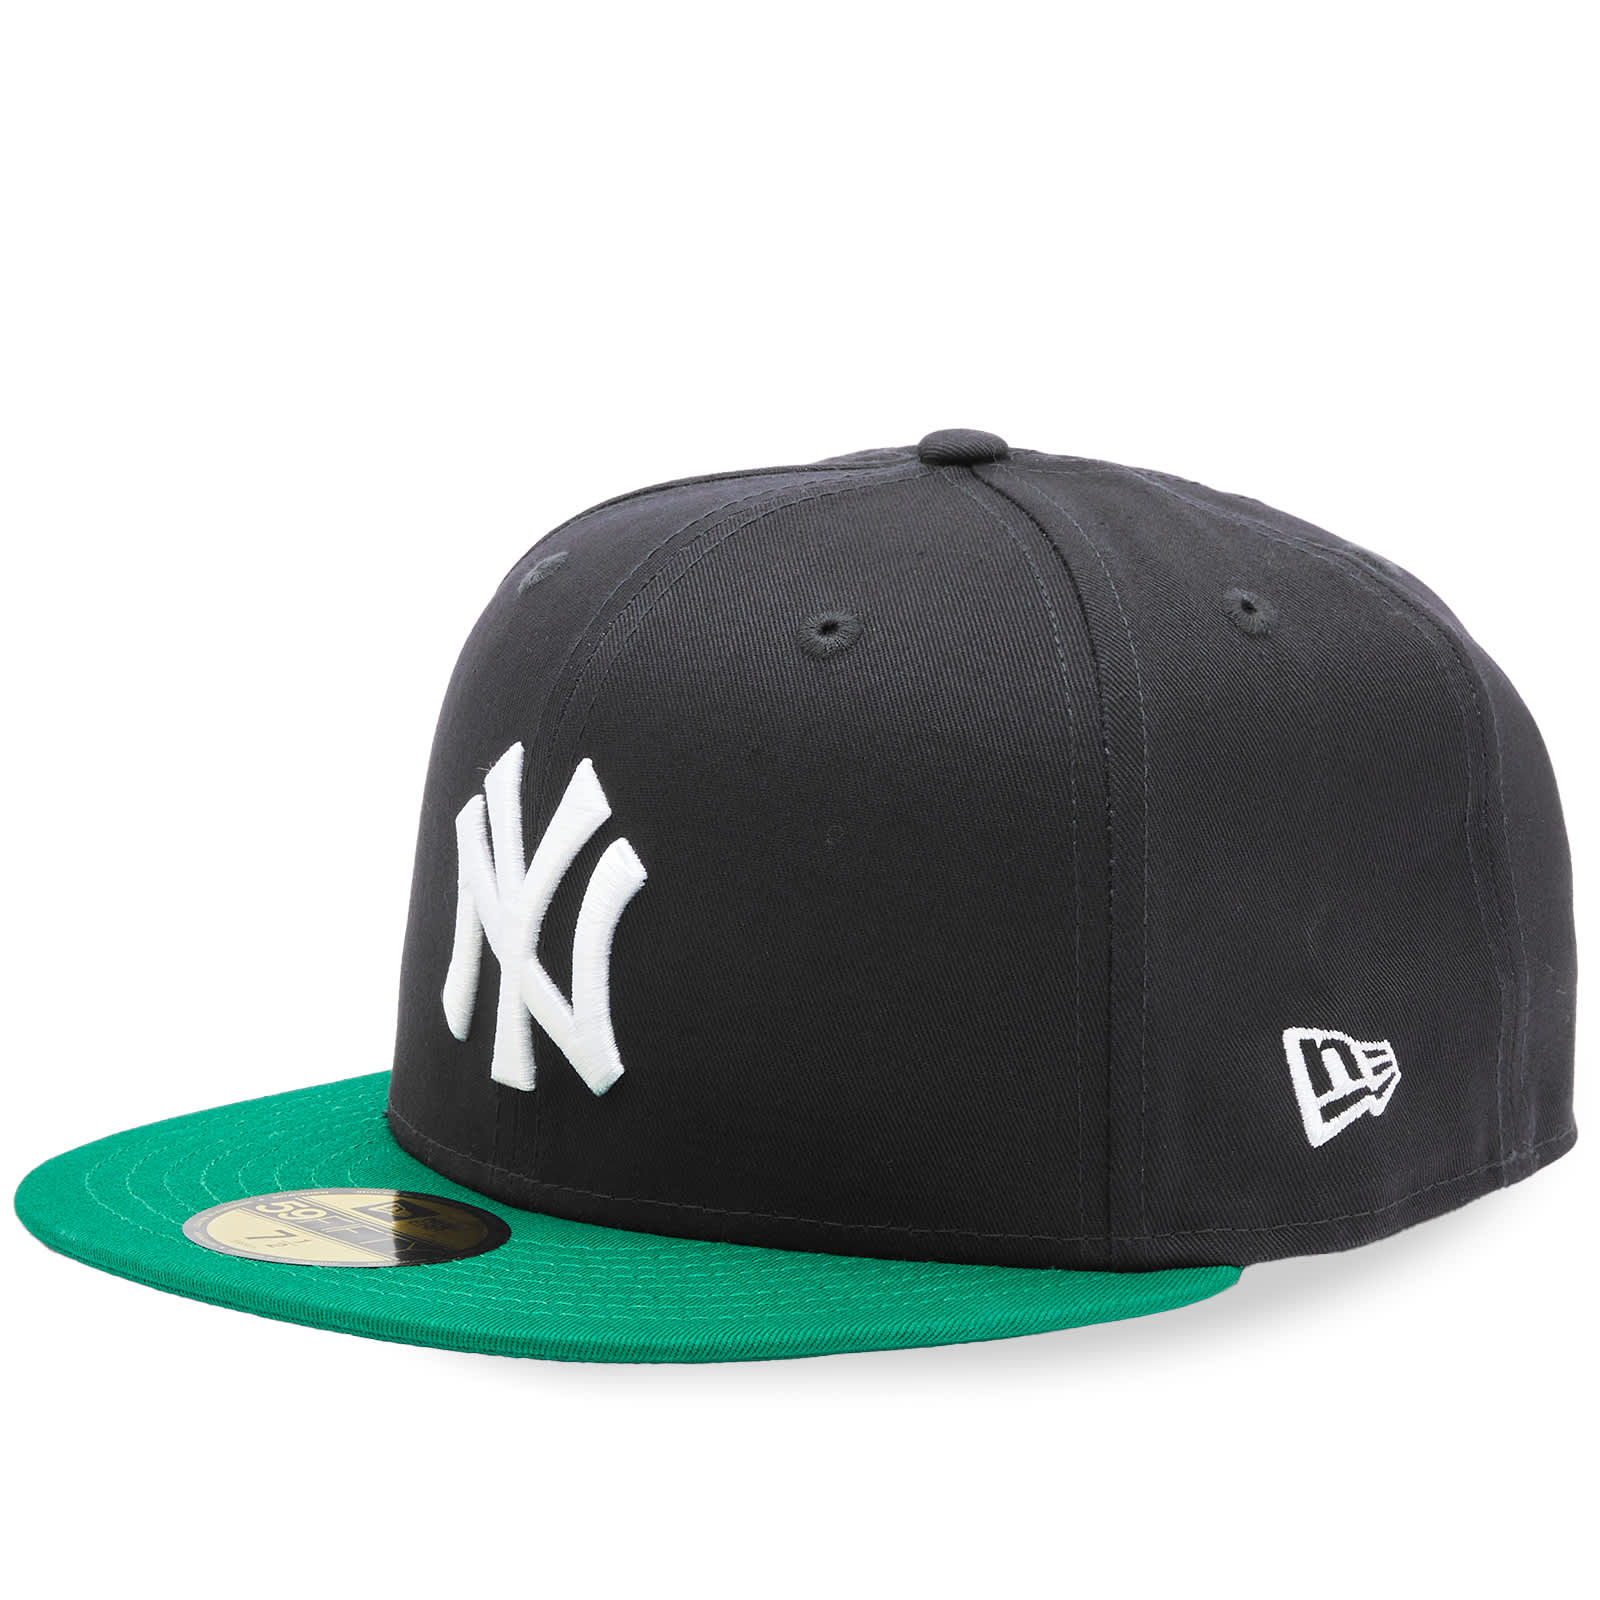 Бейсболка New Era Ny Yankees Team Colour 59Fifty, черный